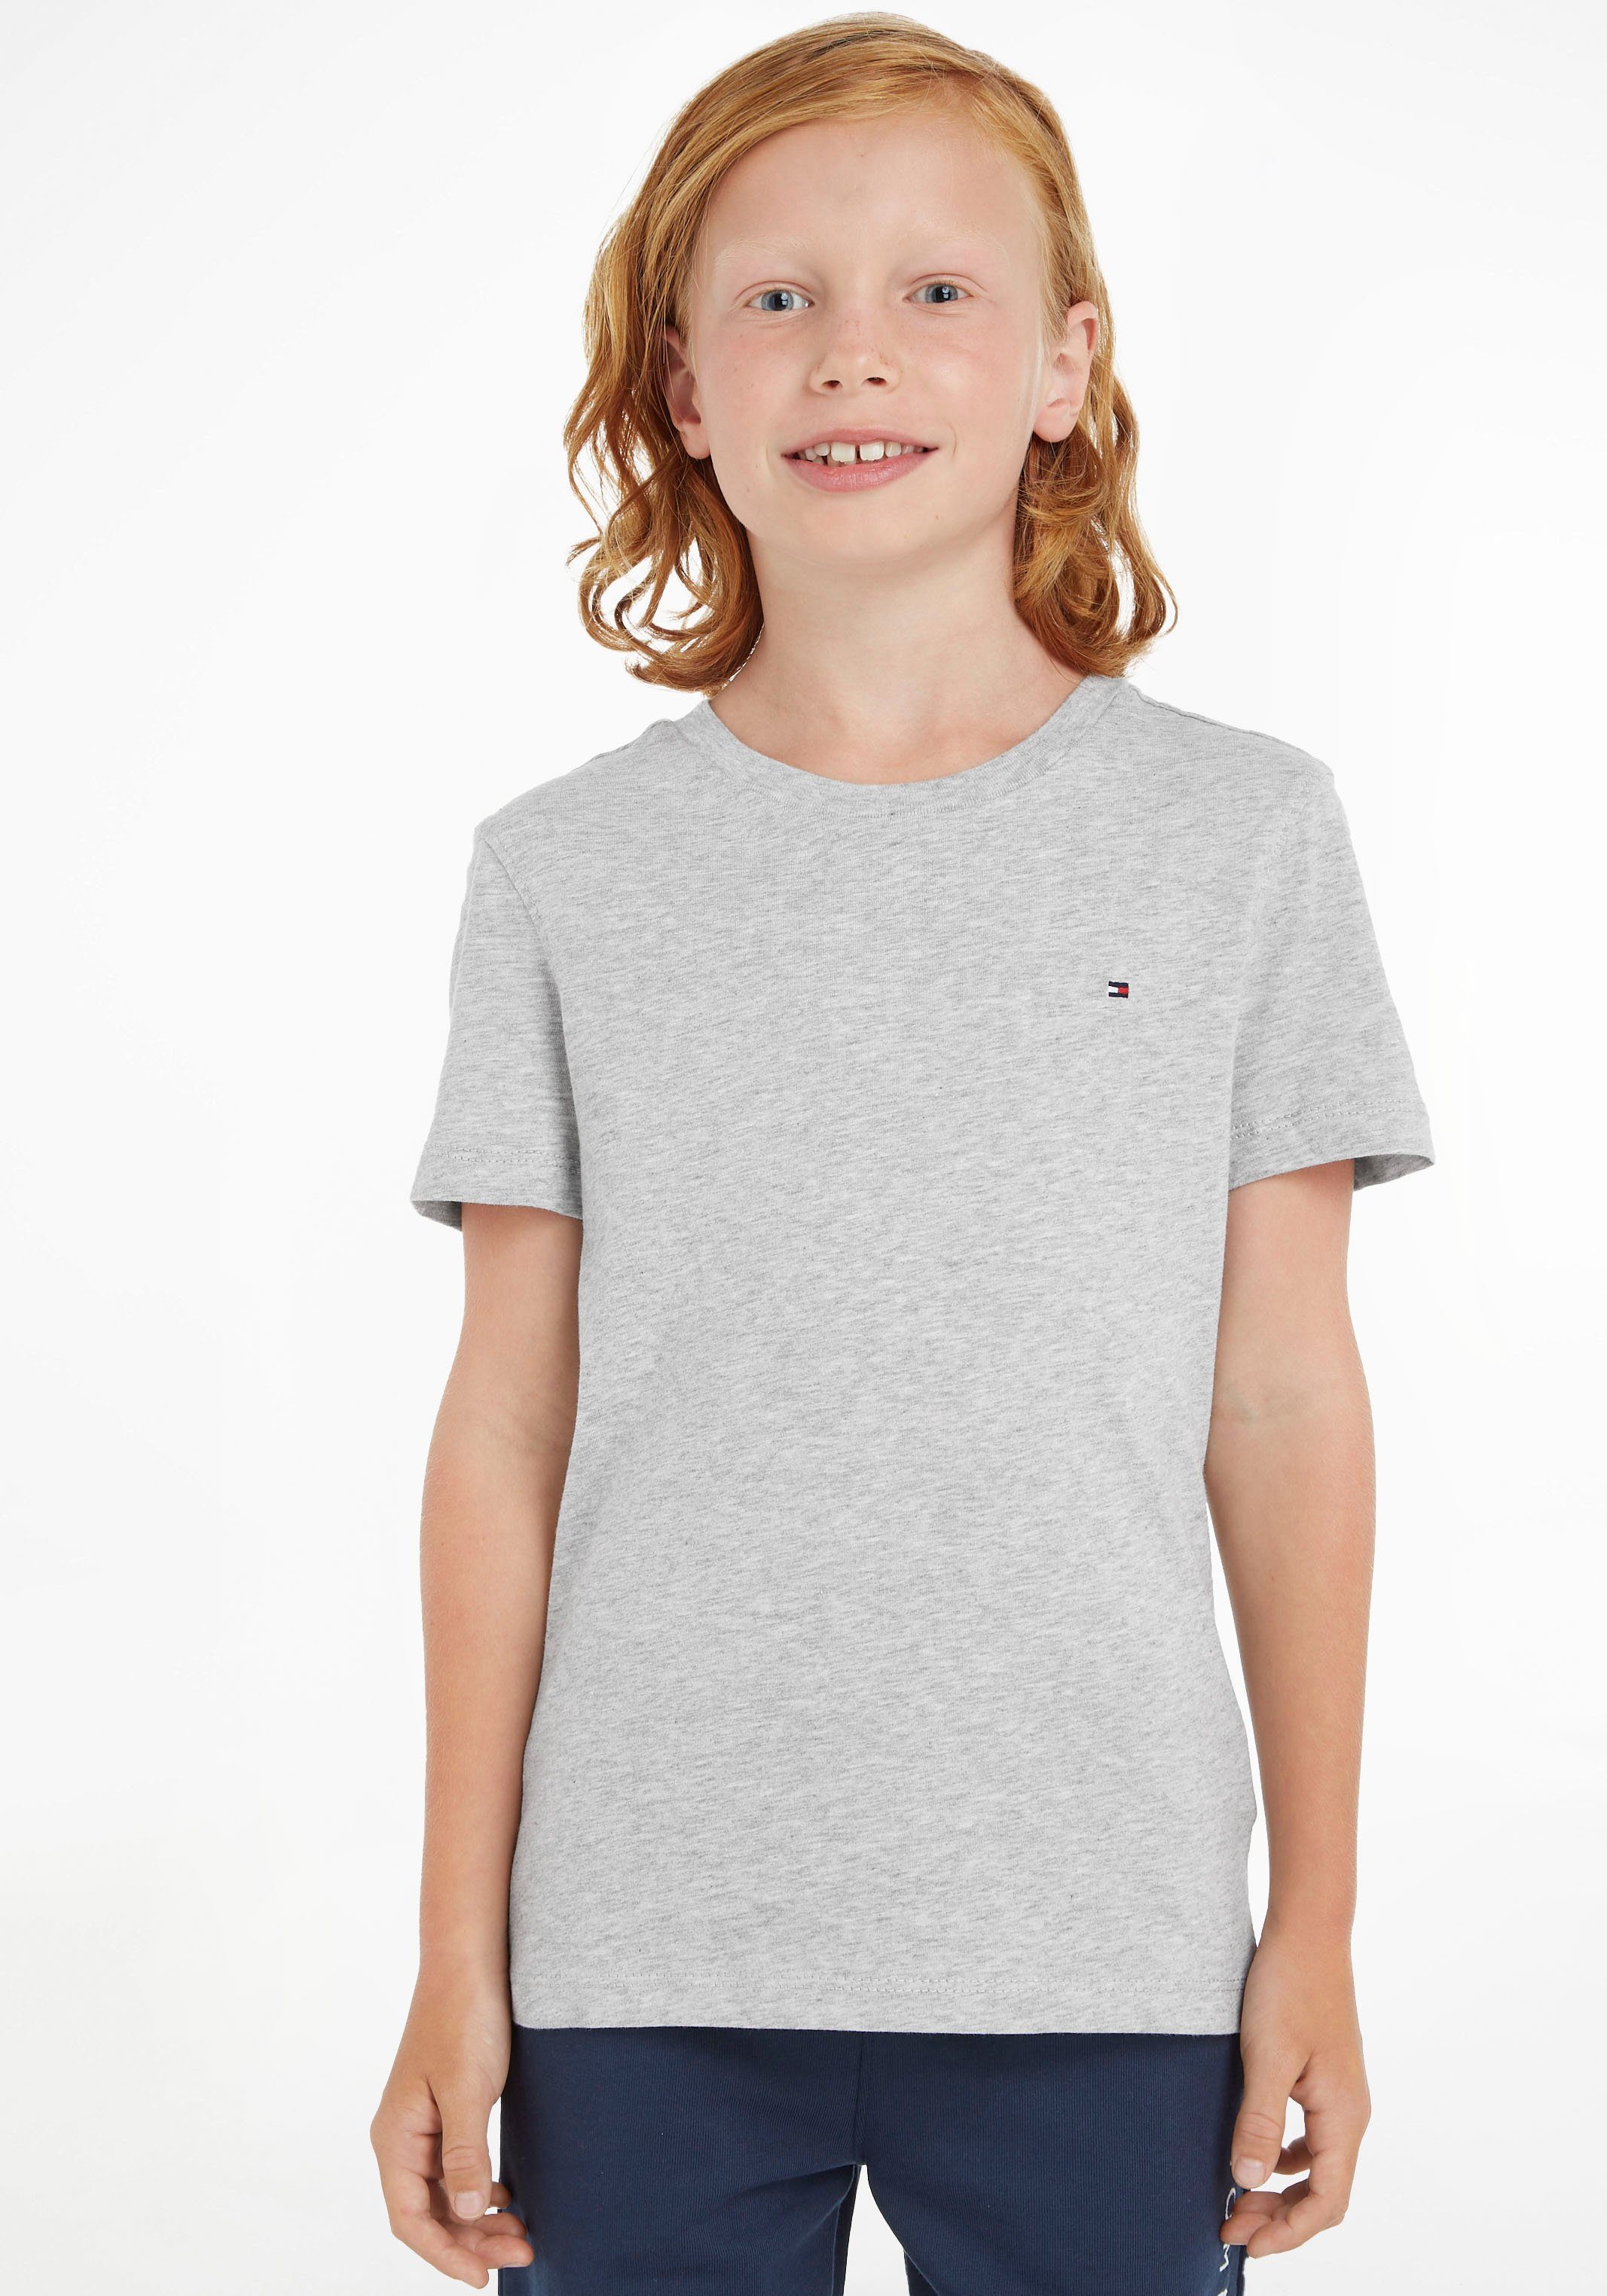 Tommy Hilfiger T-Shirt BOYS CN Kids MiniMe BASIC Kinder Junior KNIT